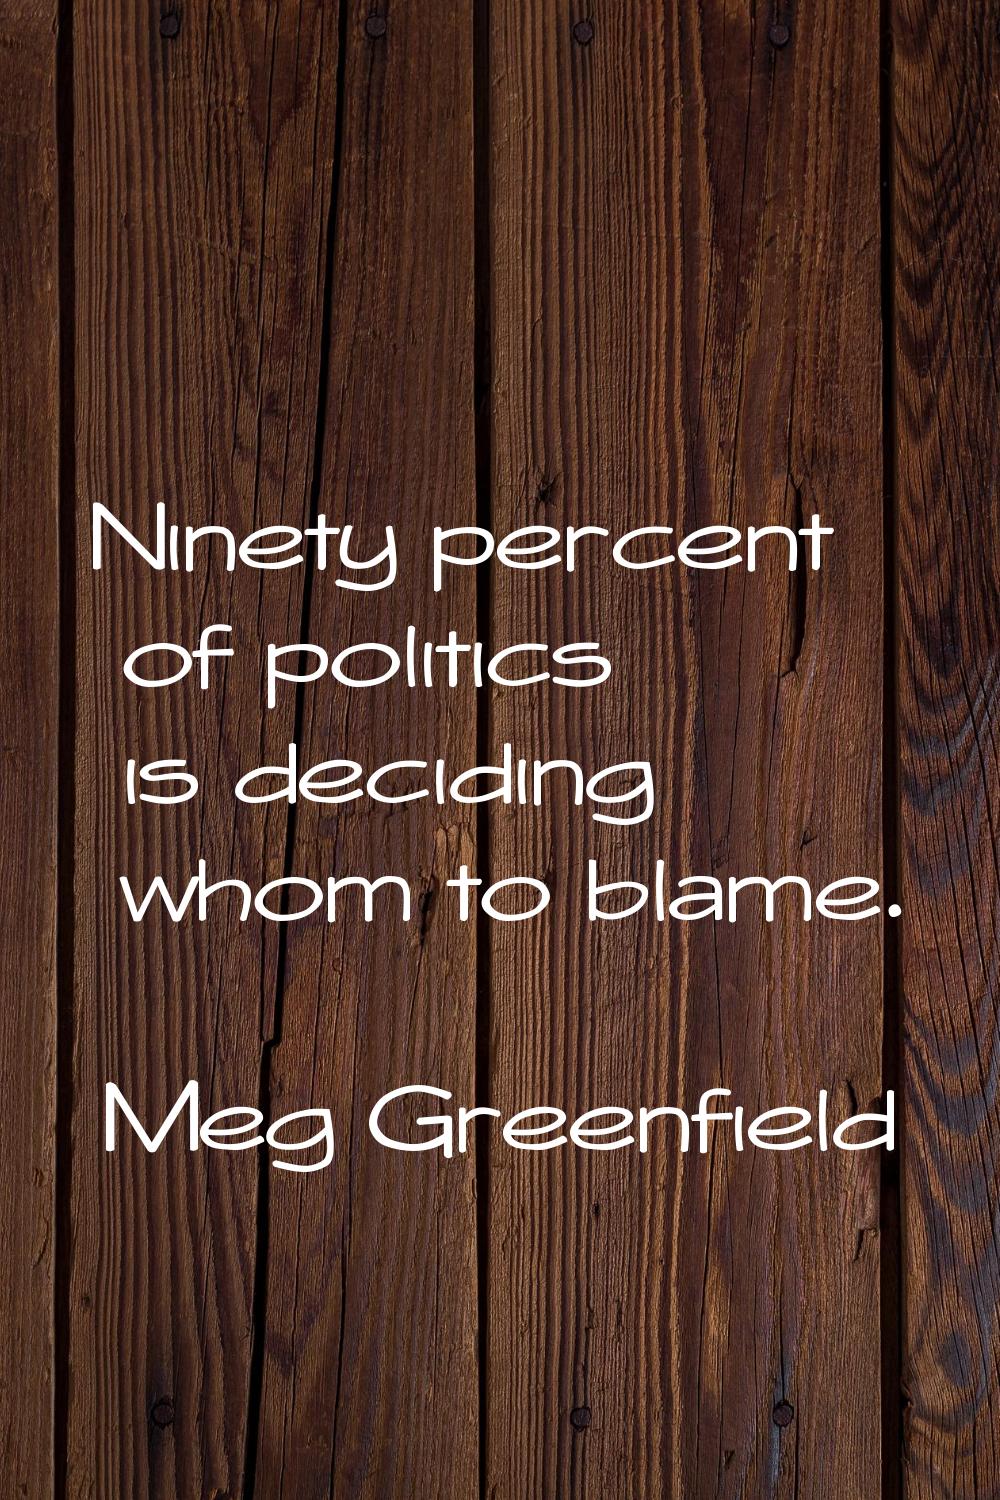 Ninety percent of politics is deciding whom to blame.